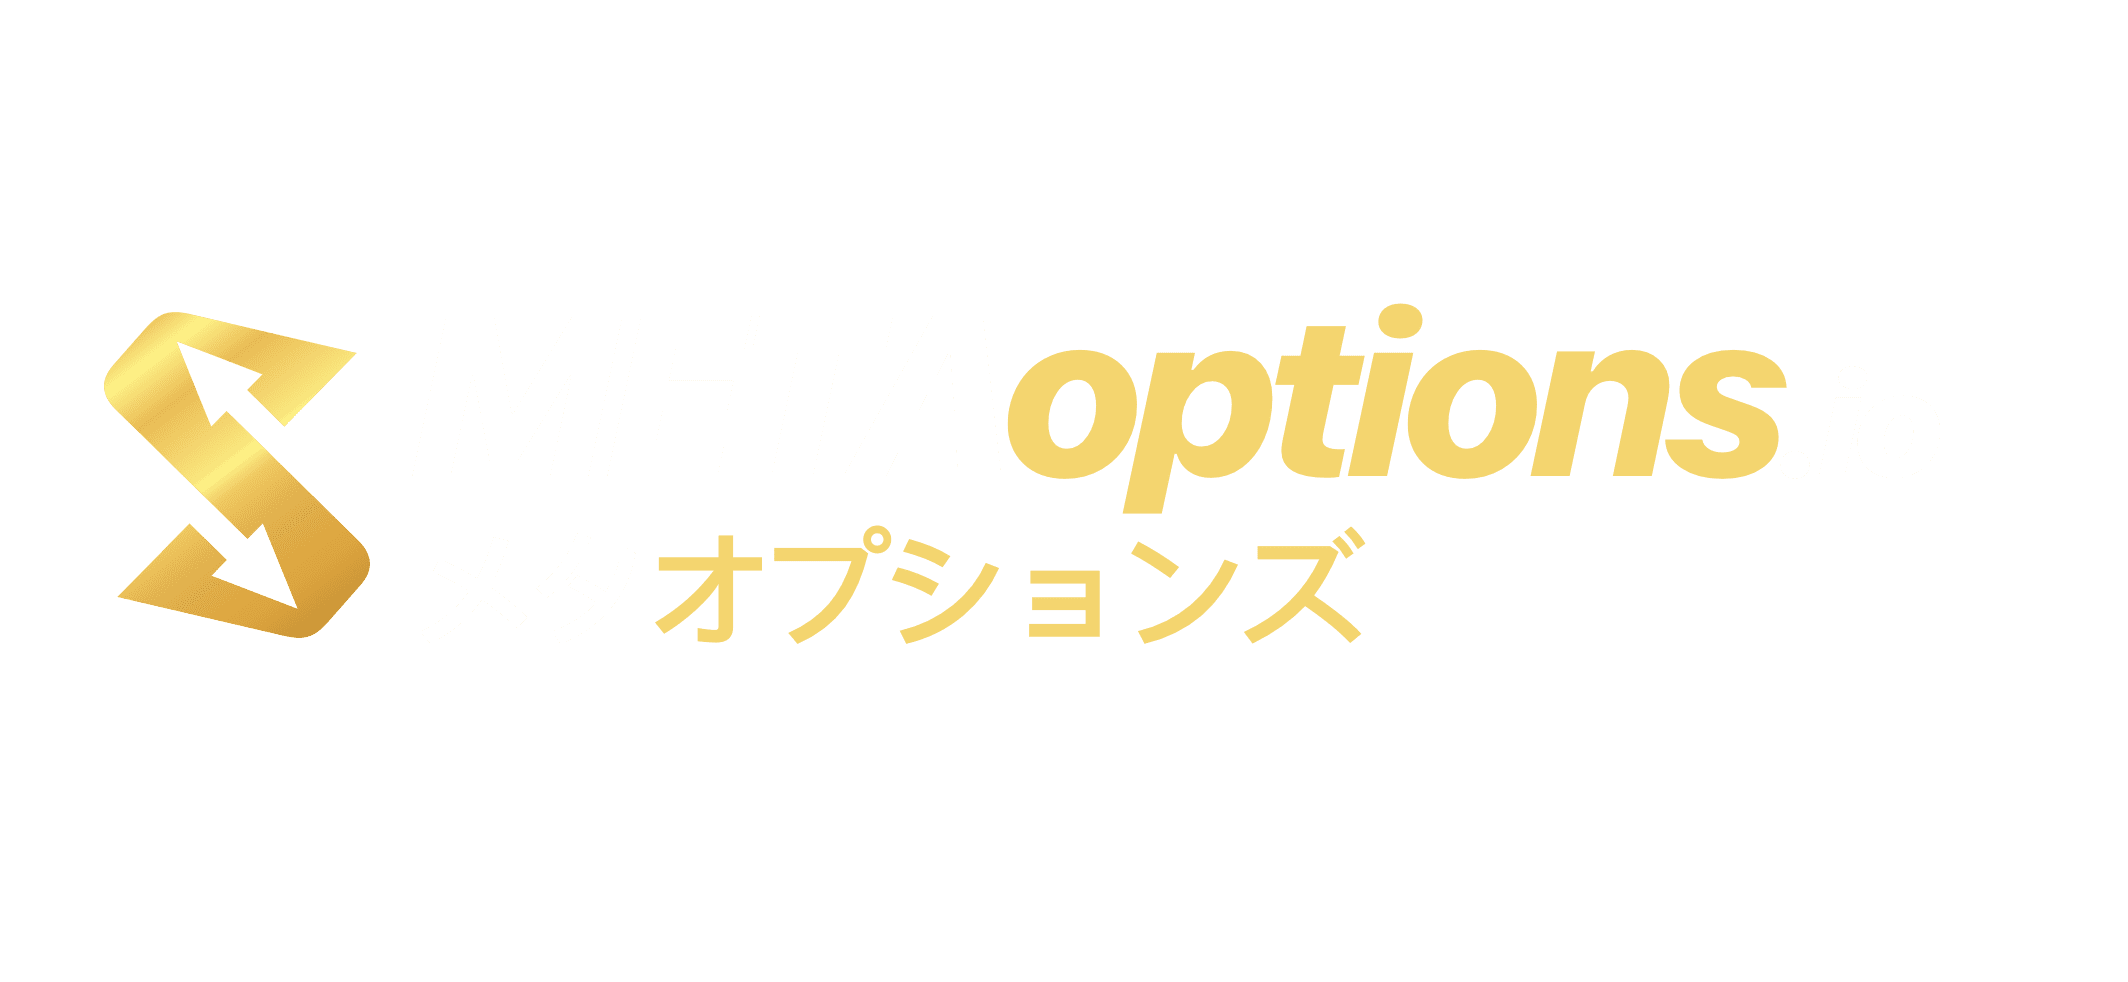 Register on the METAOPTIONS website